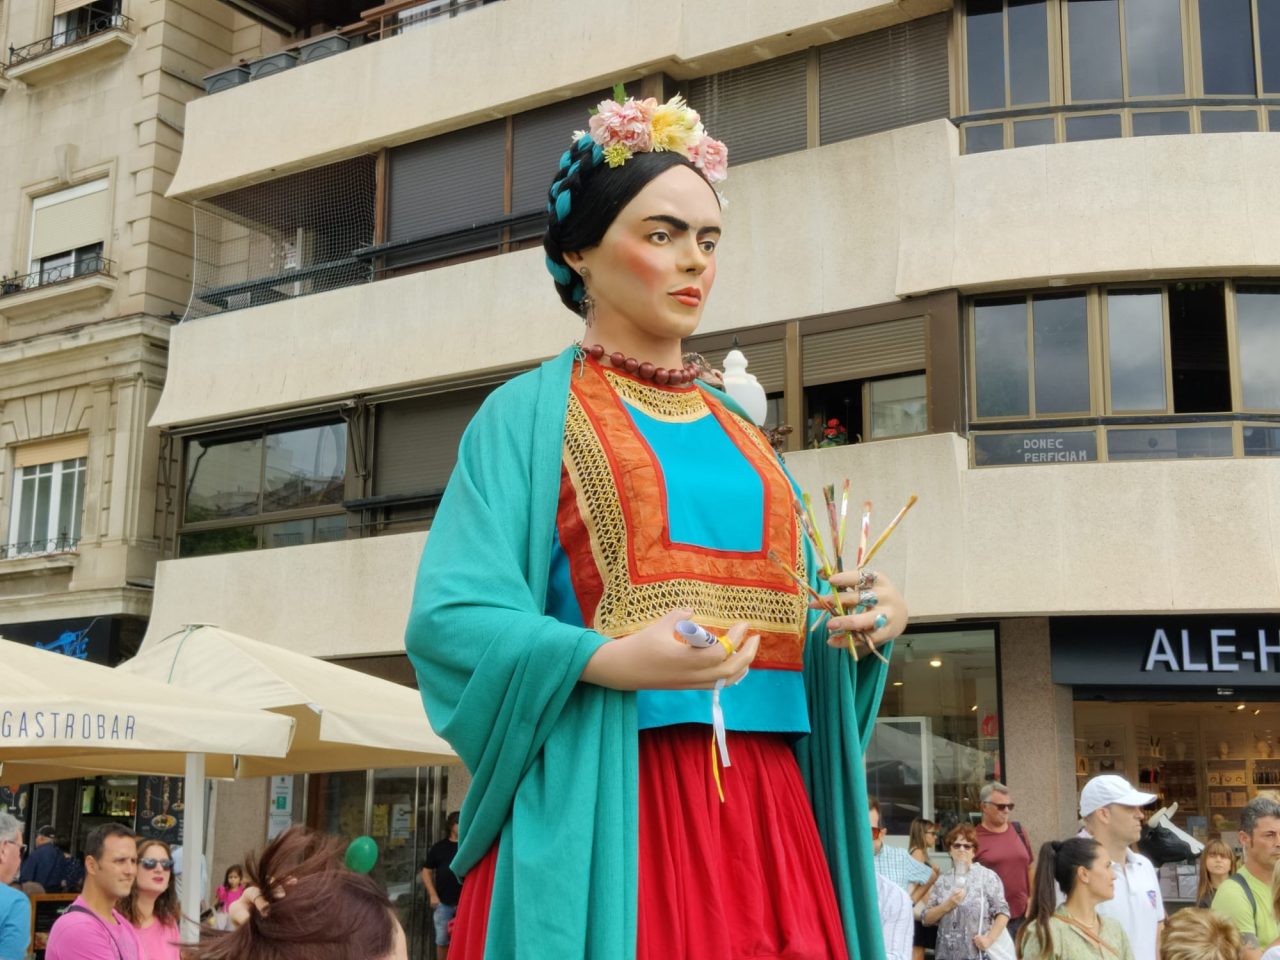 Frida-Festa-per-a-Tothom3-1280x960.jpg